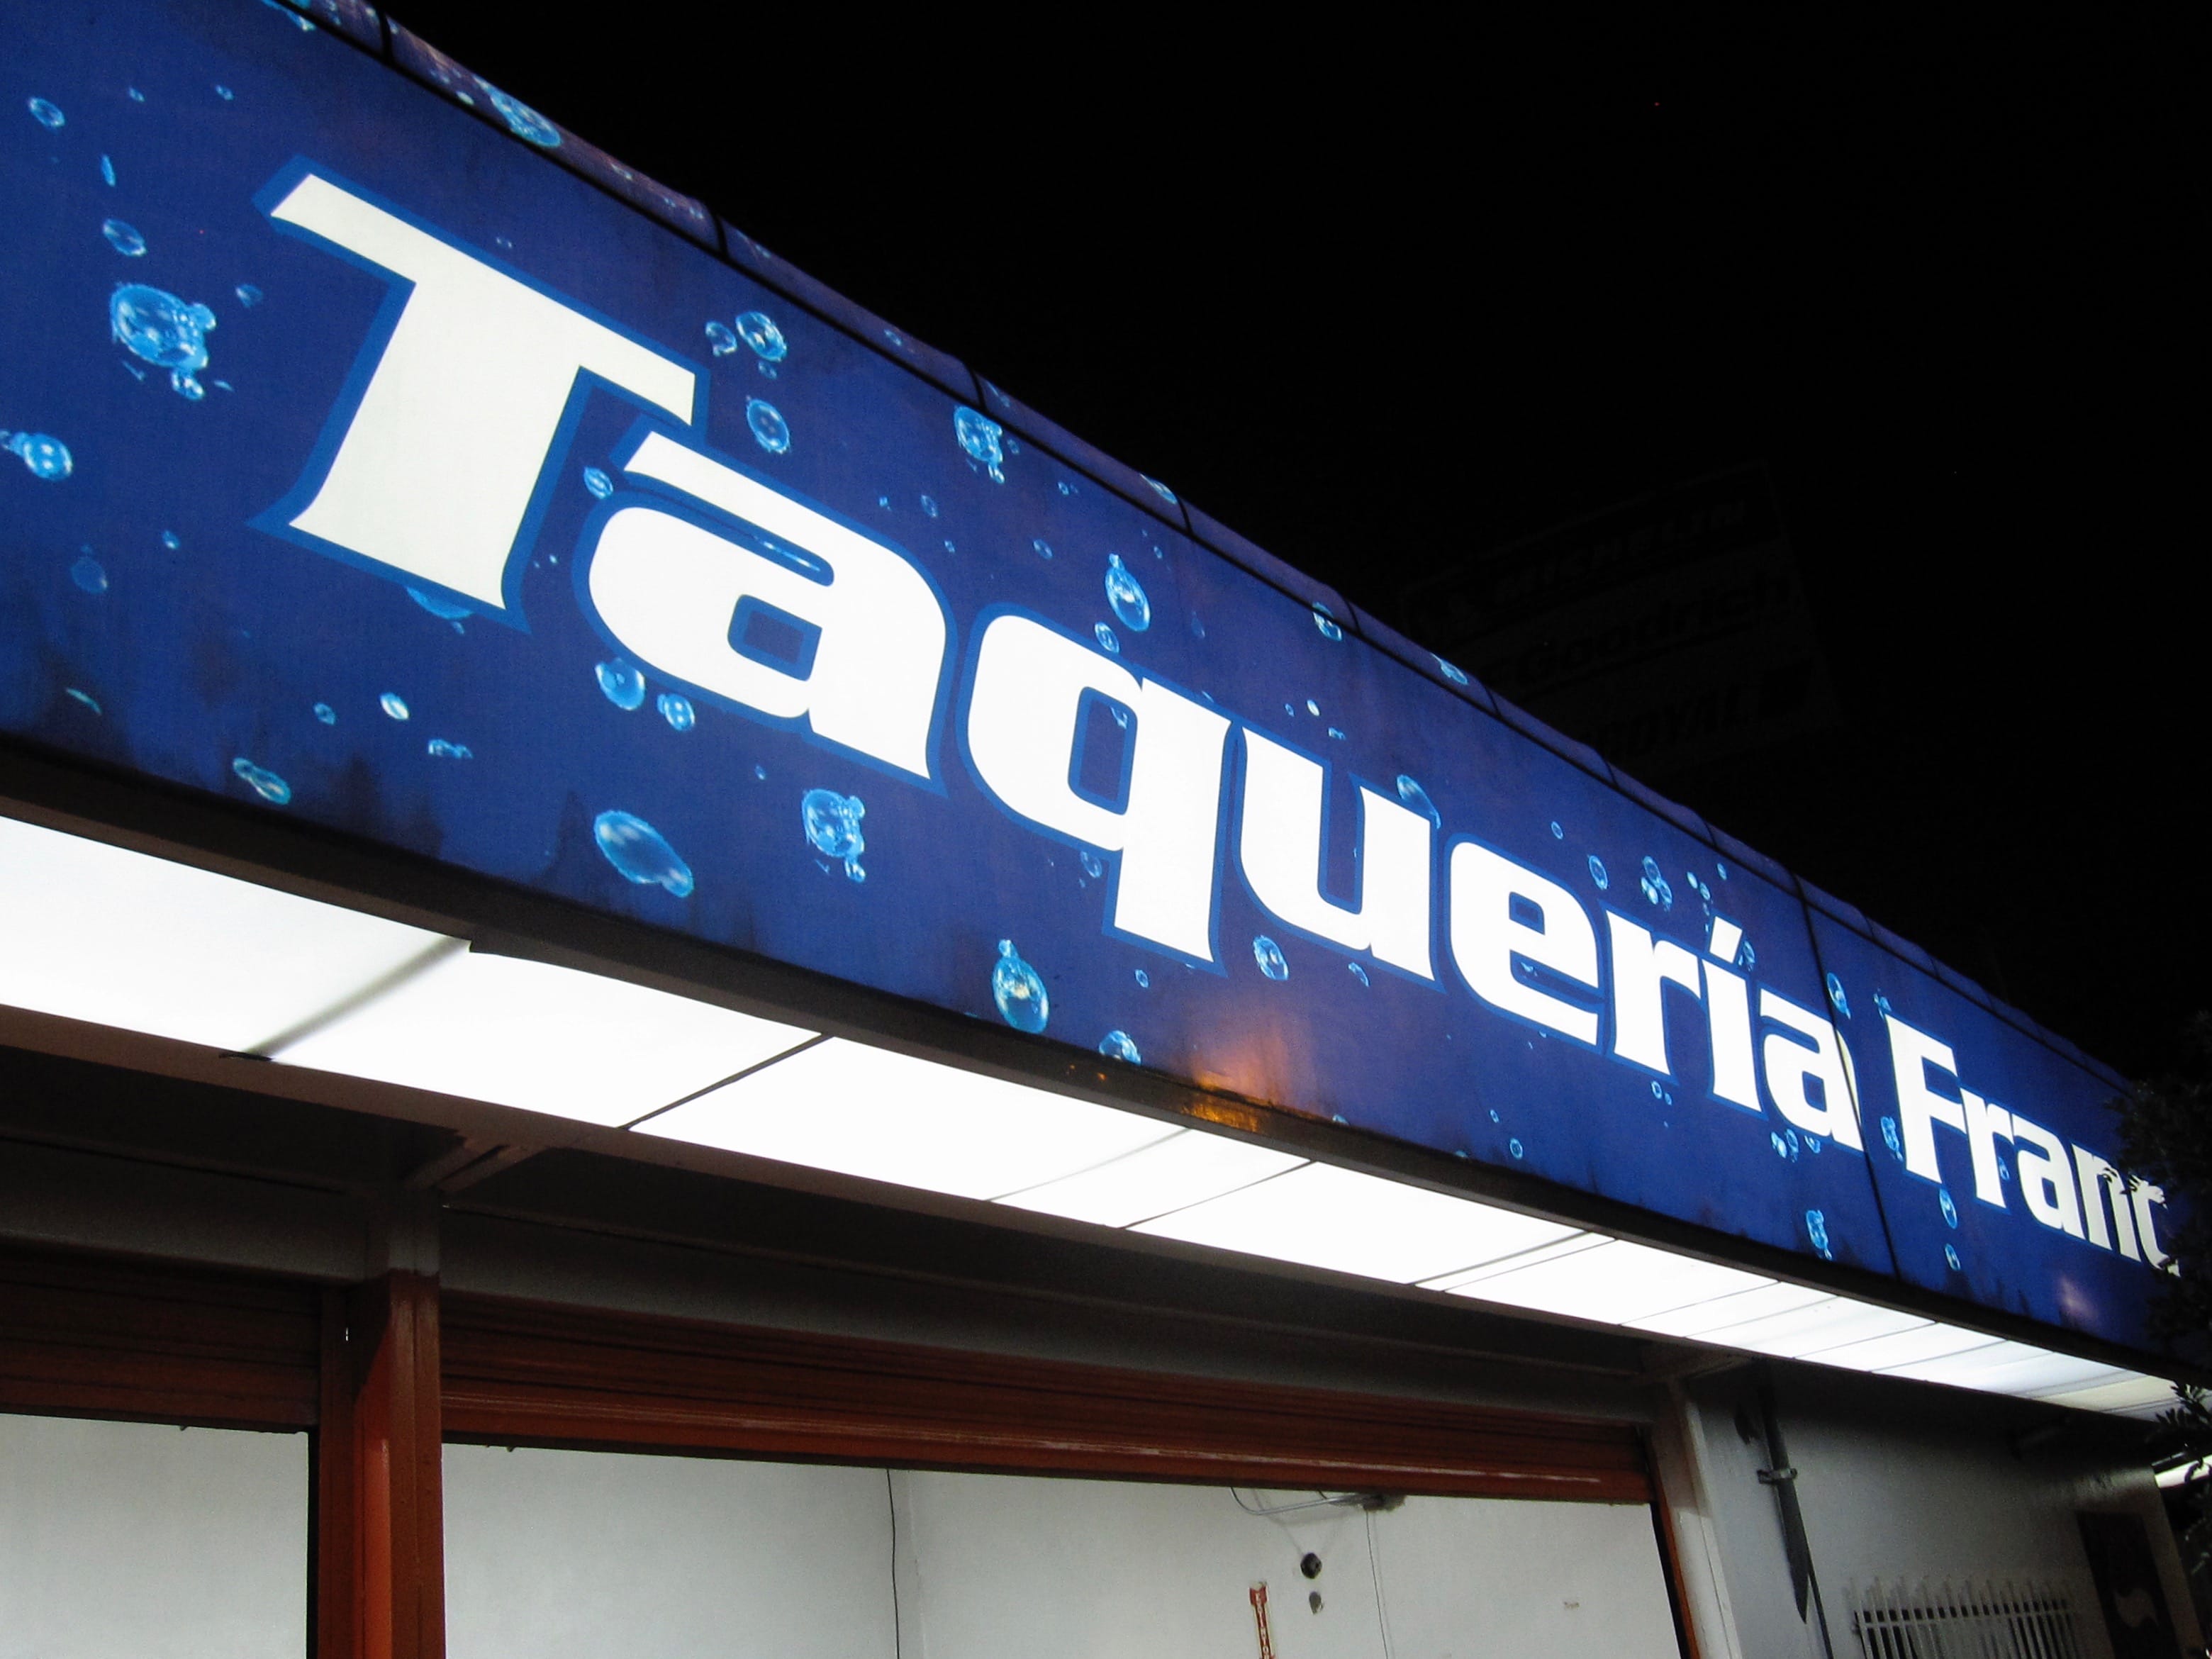 Restaurant Tijuana